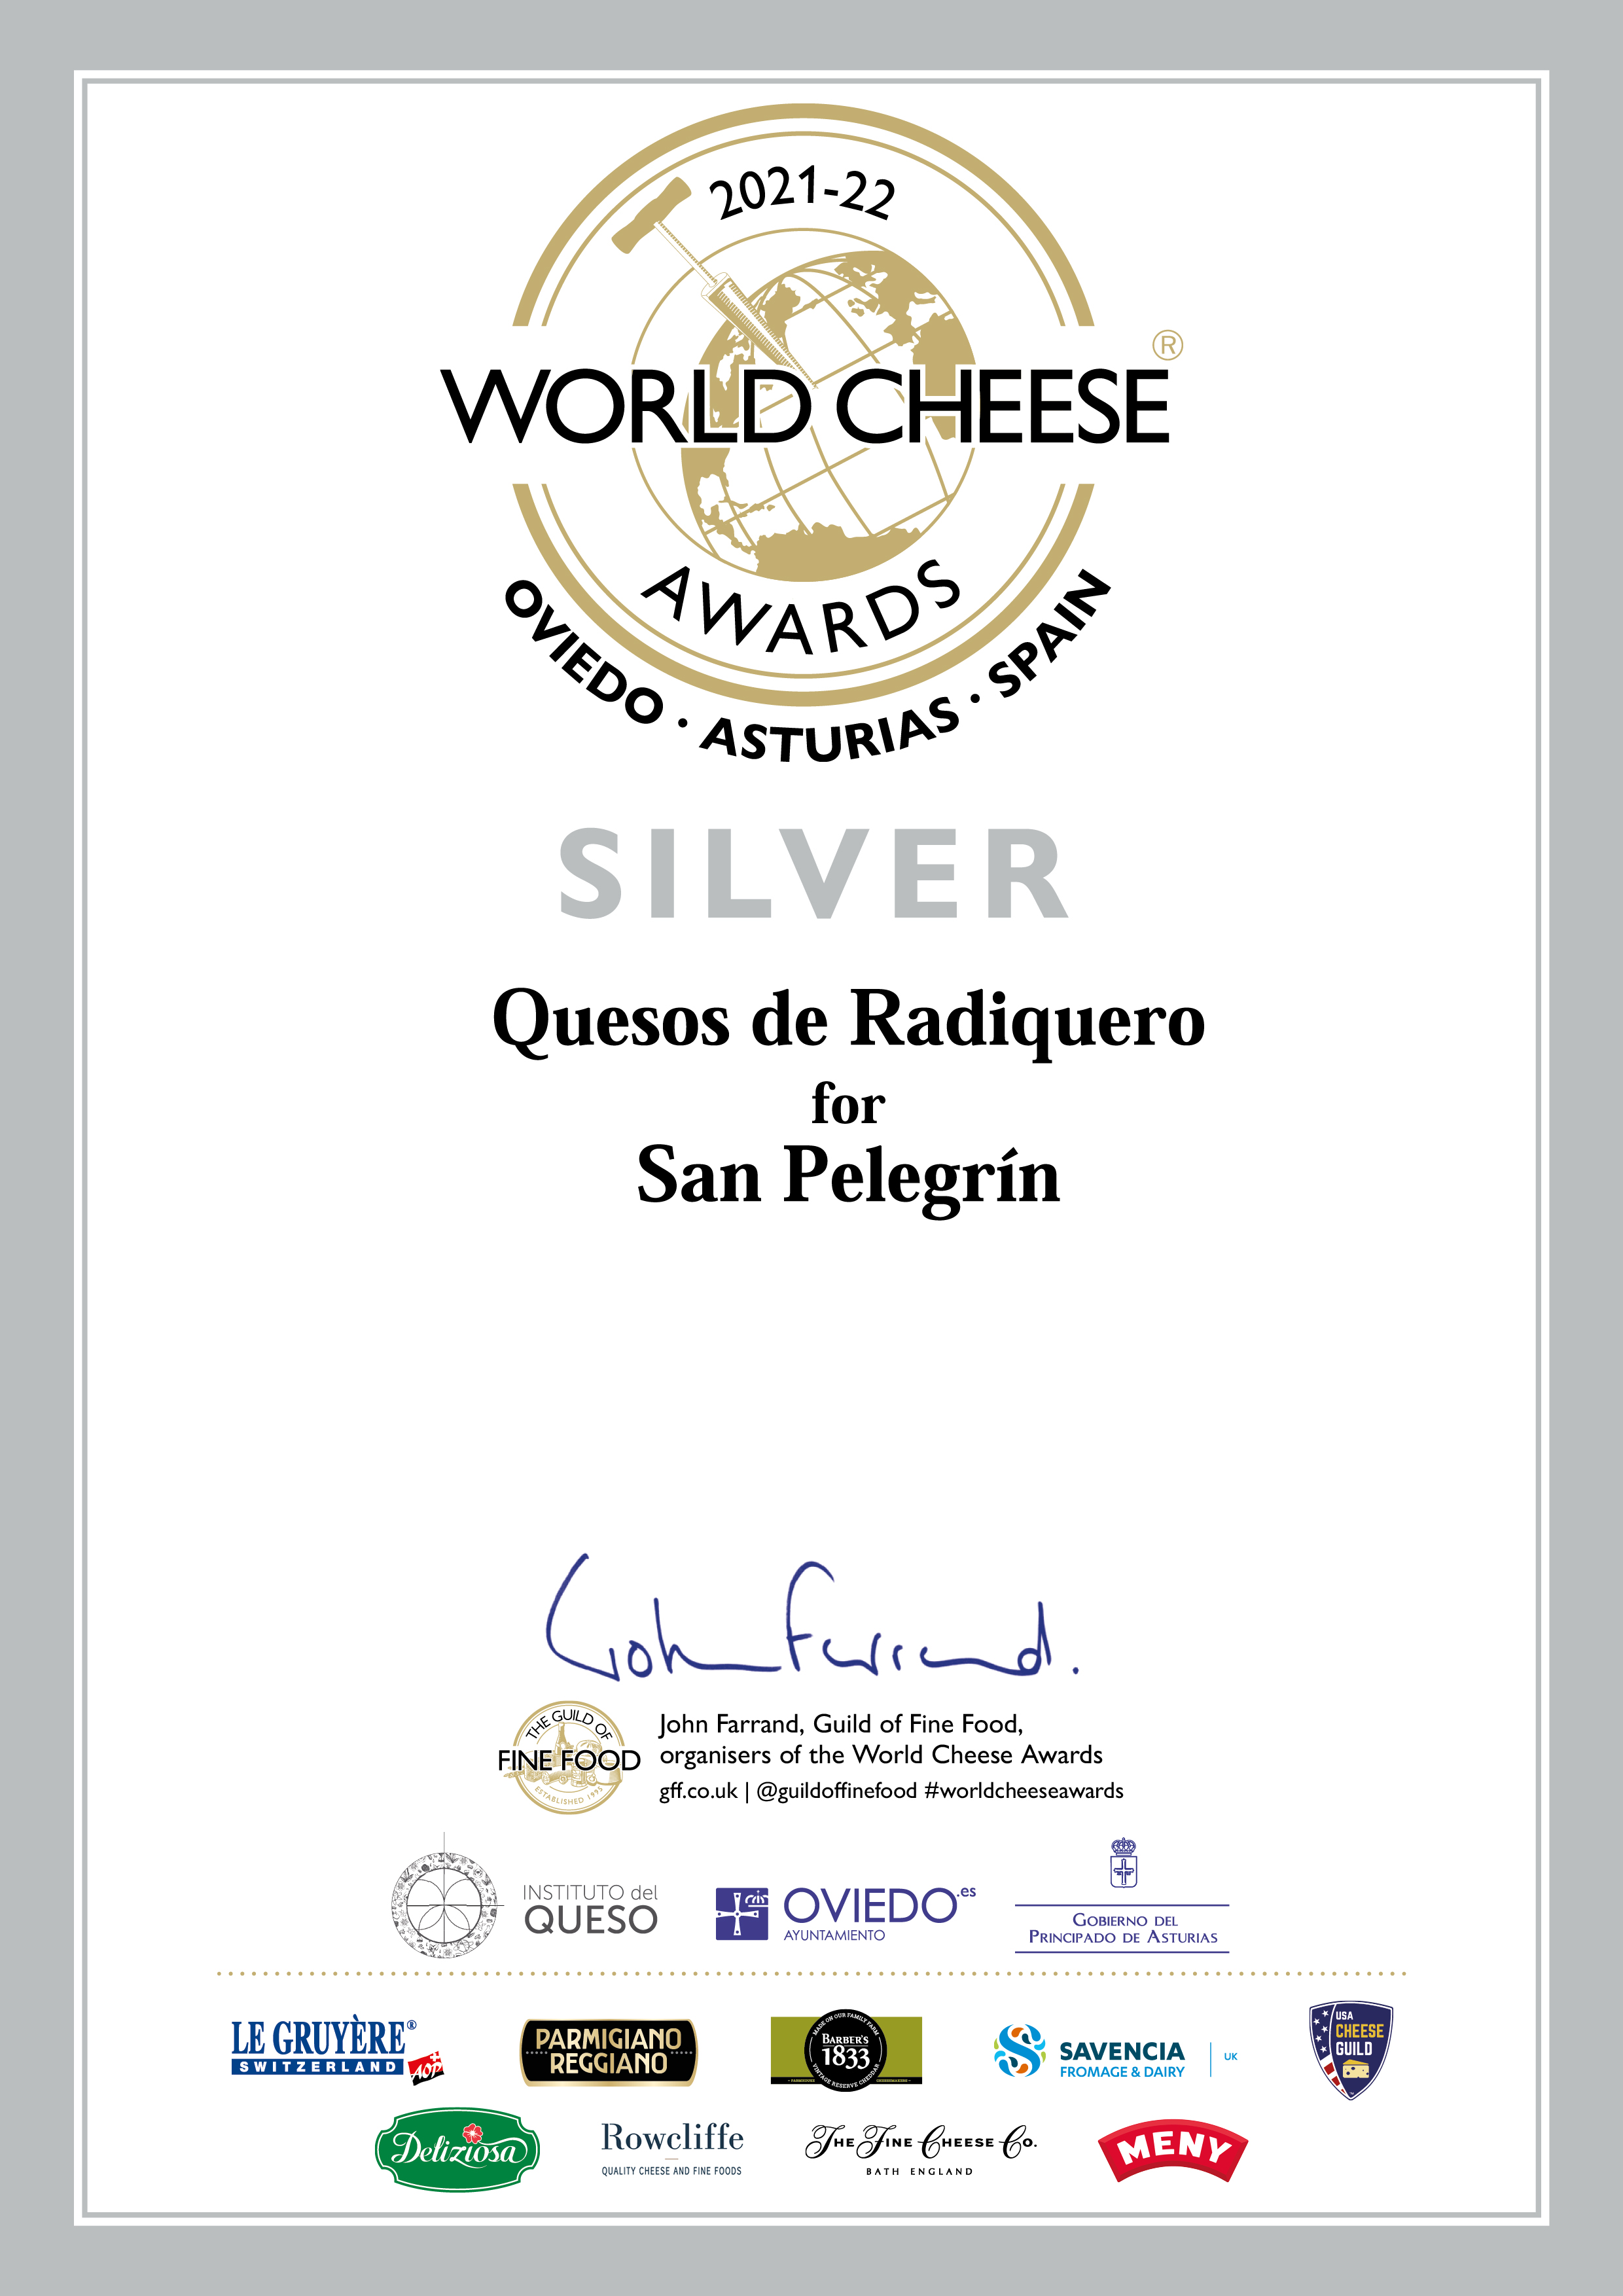 World Cheese Awards 2021 plata